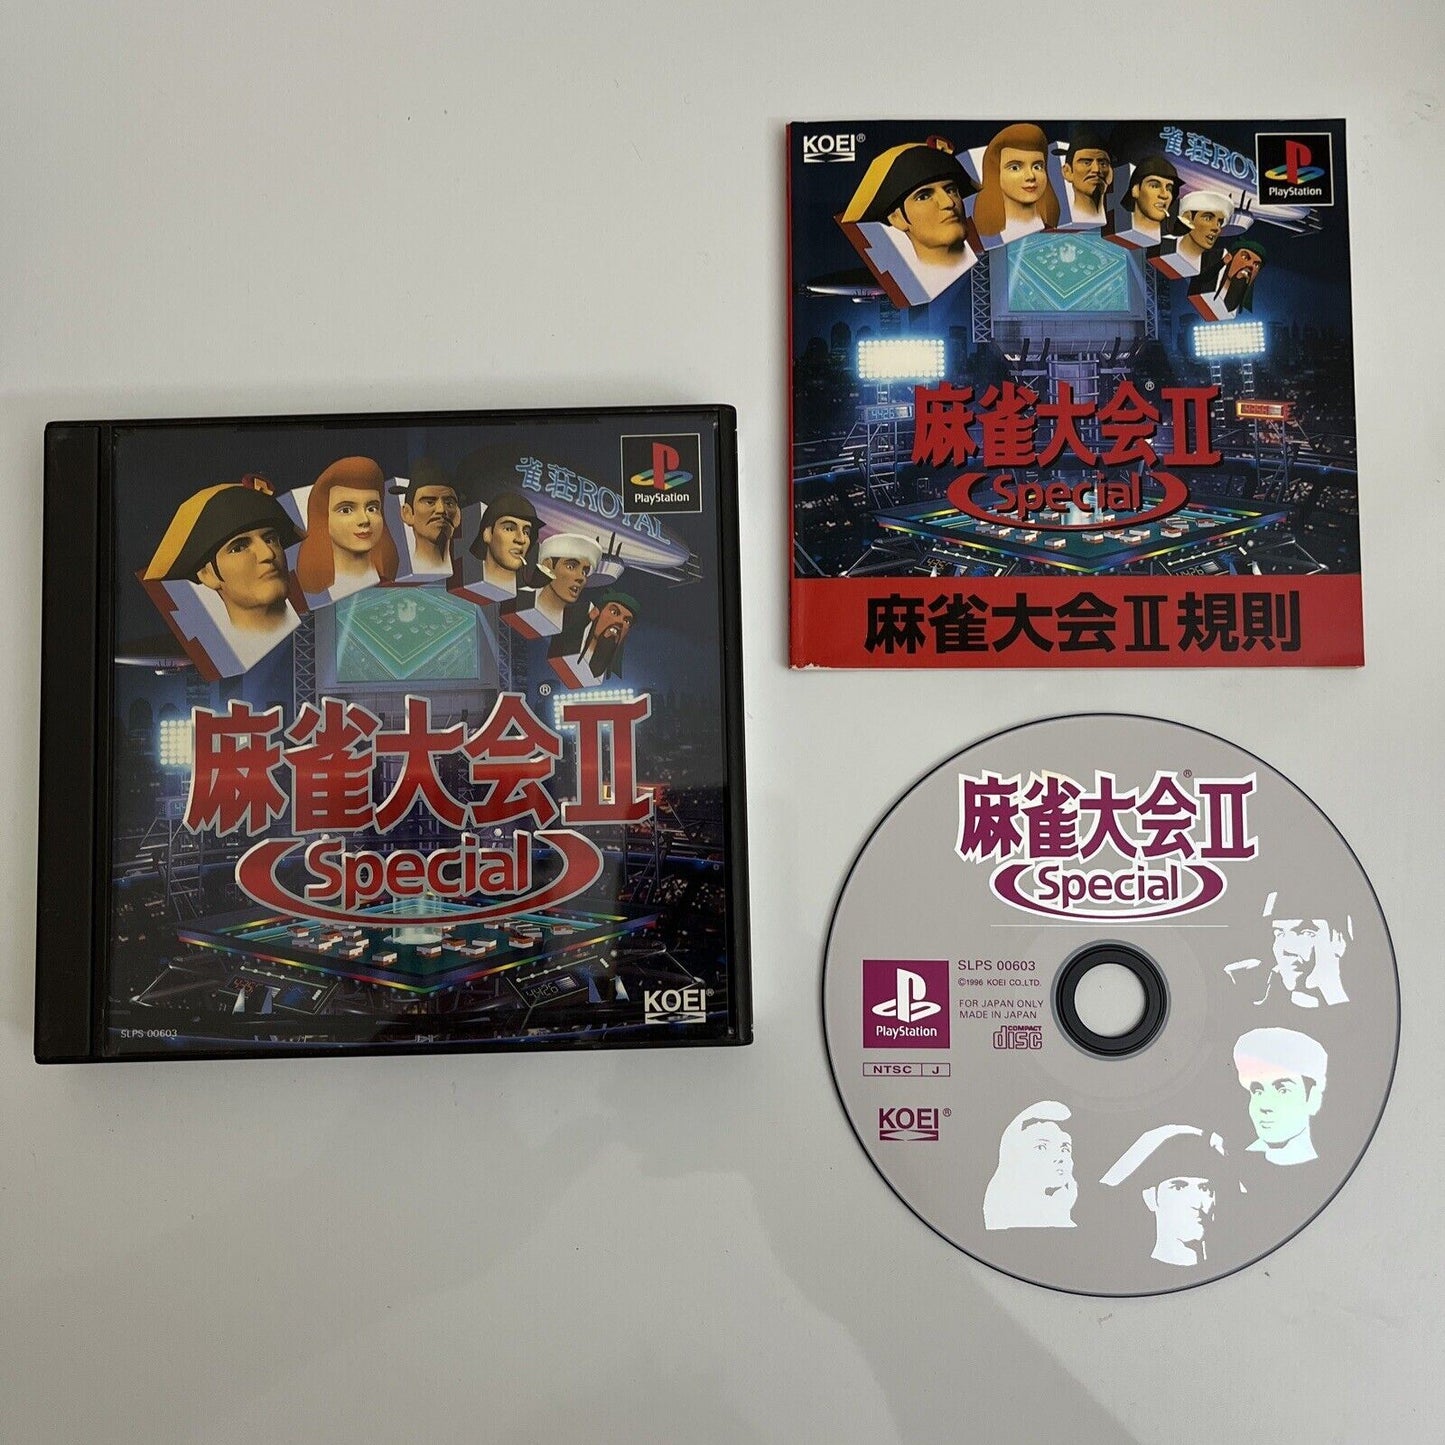 Mahjong Taikai II Special - Sony PlayStation PS1 NTSC-J JAPAN Koei 1996 Game